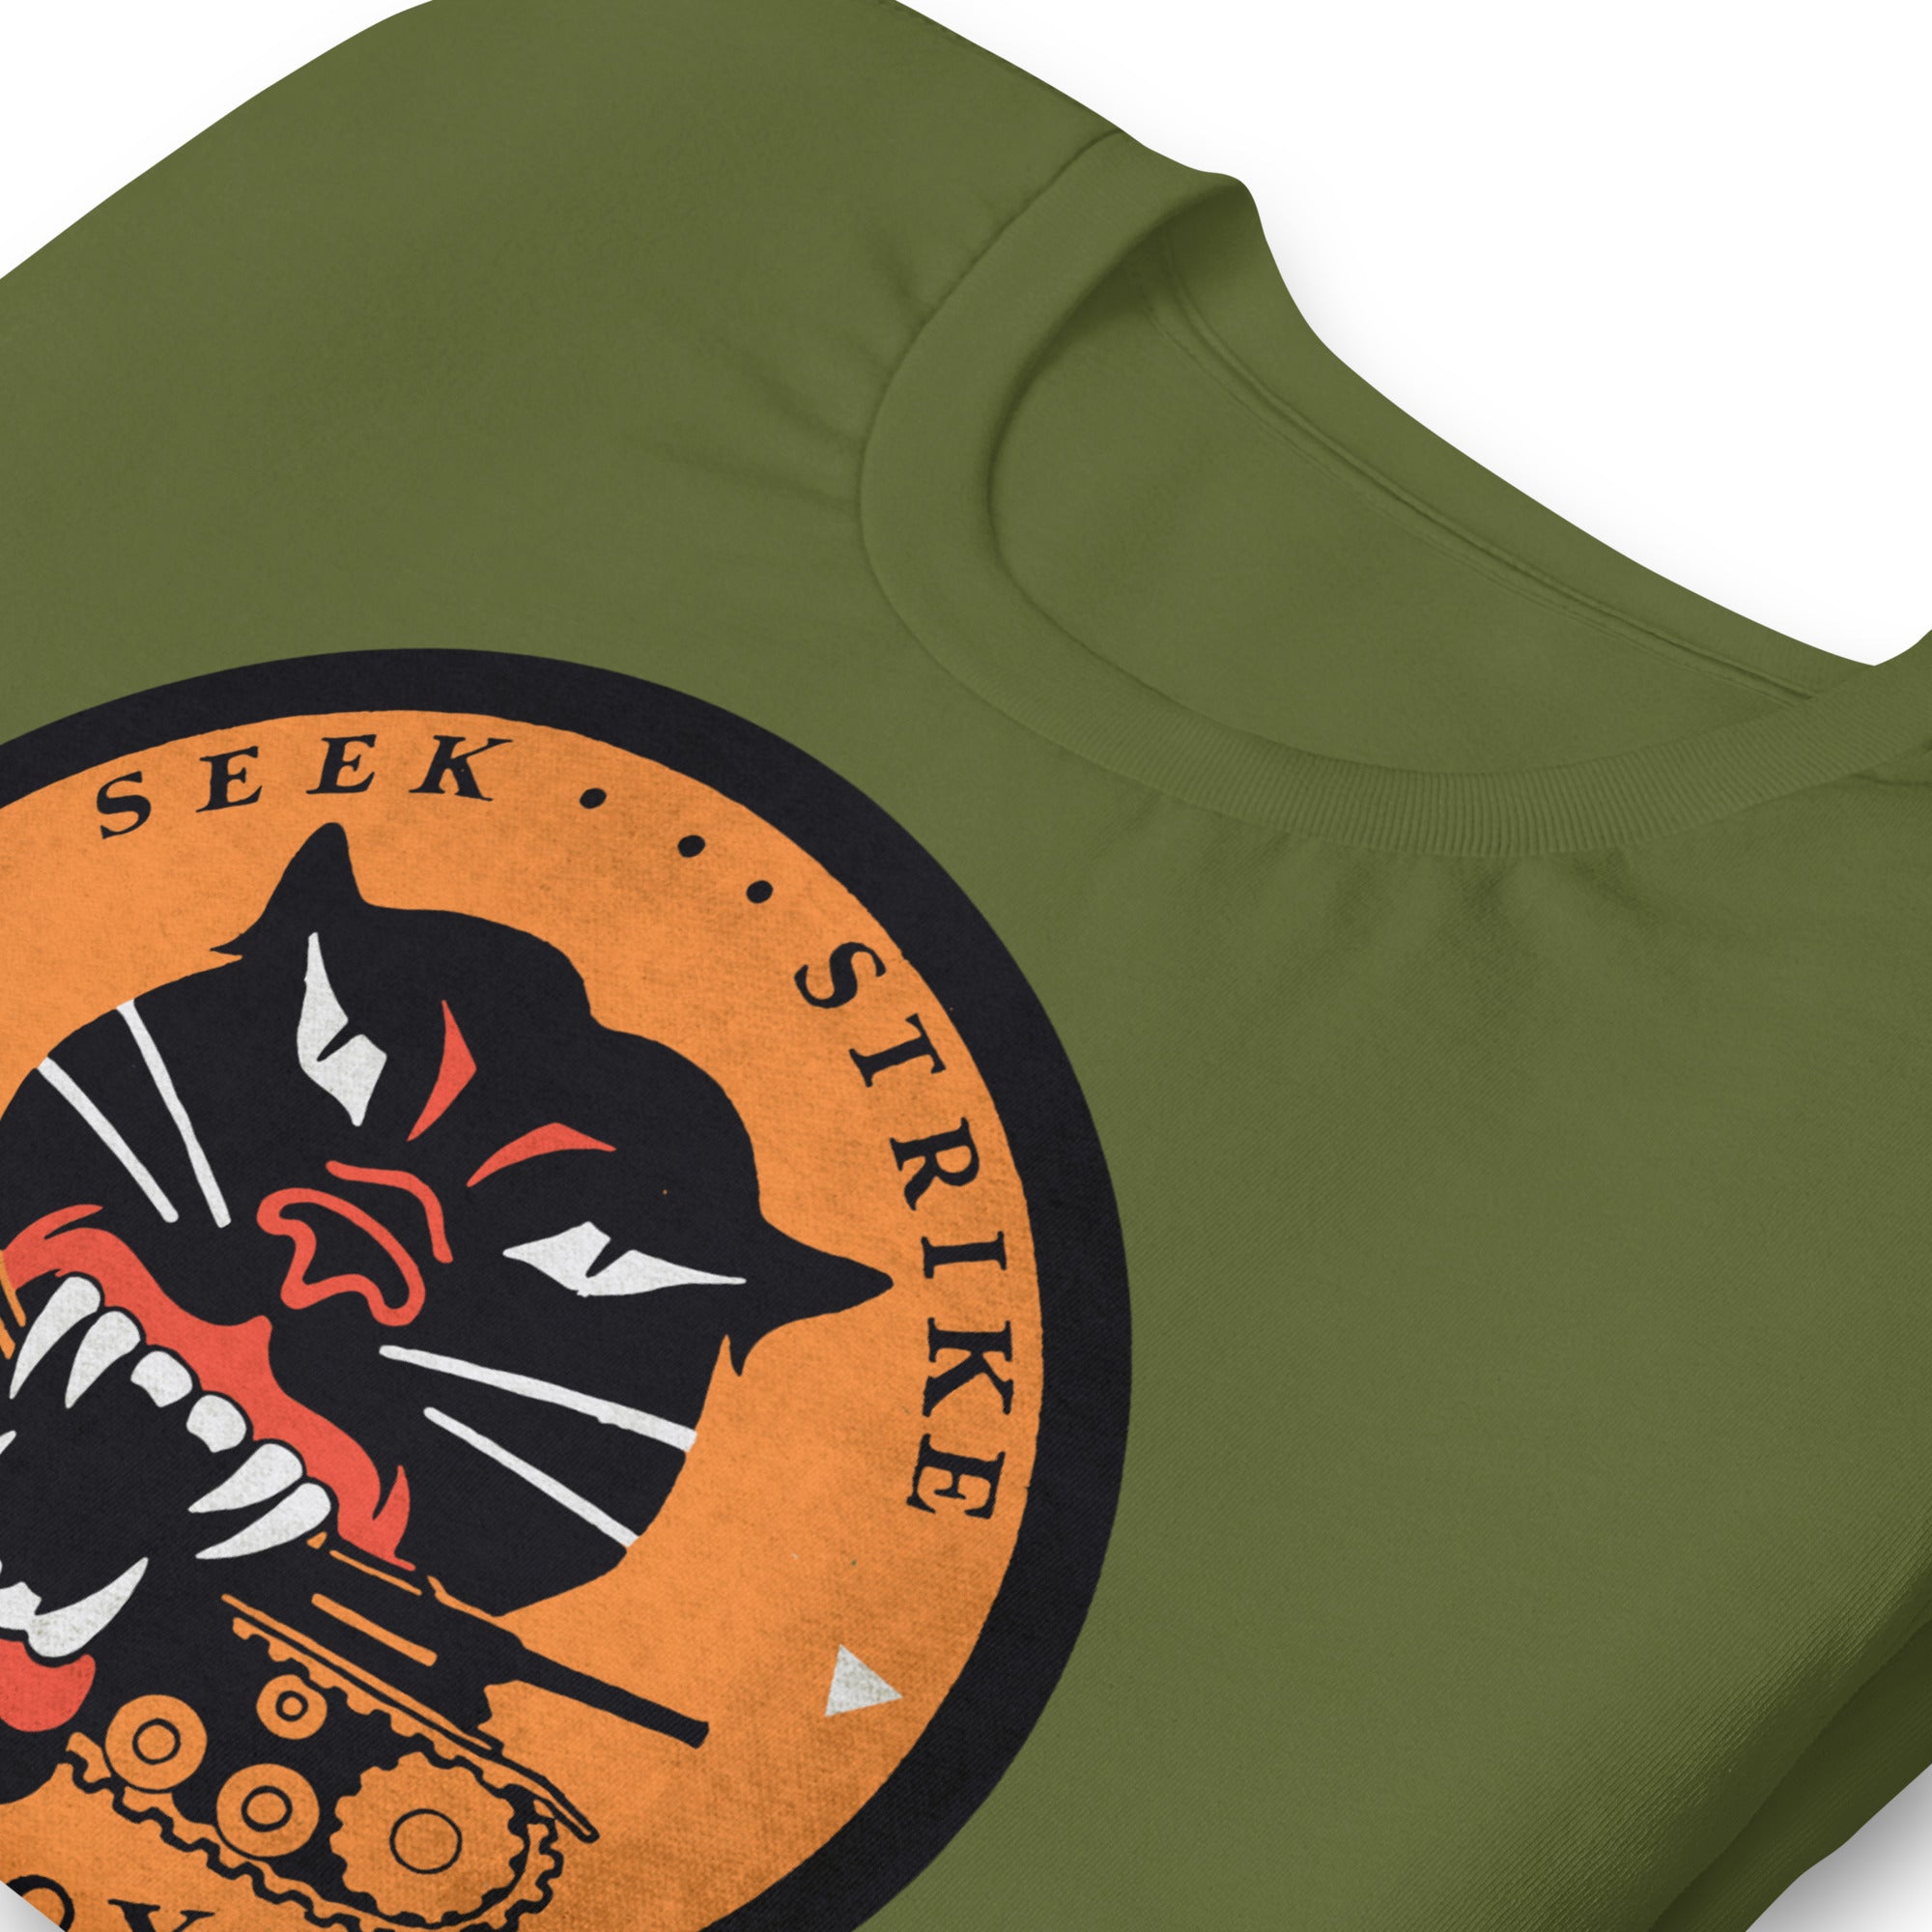 Seek Strike Destroy WW2 Tank Destroyer Graphic T-Shirt